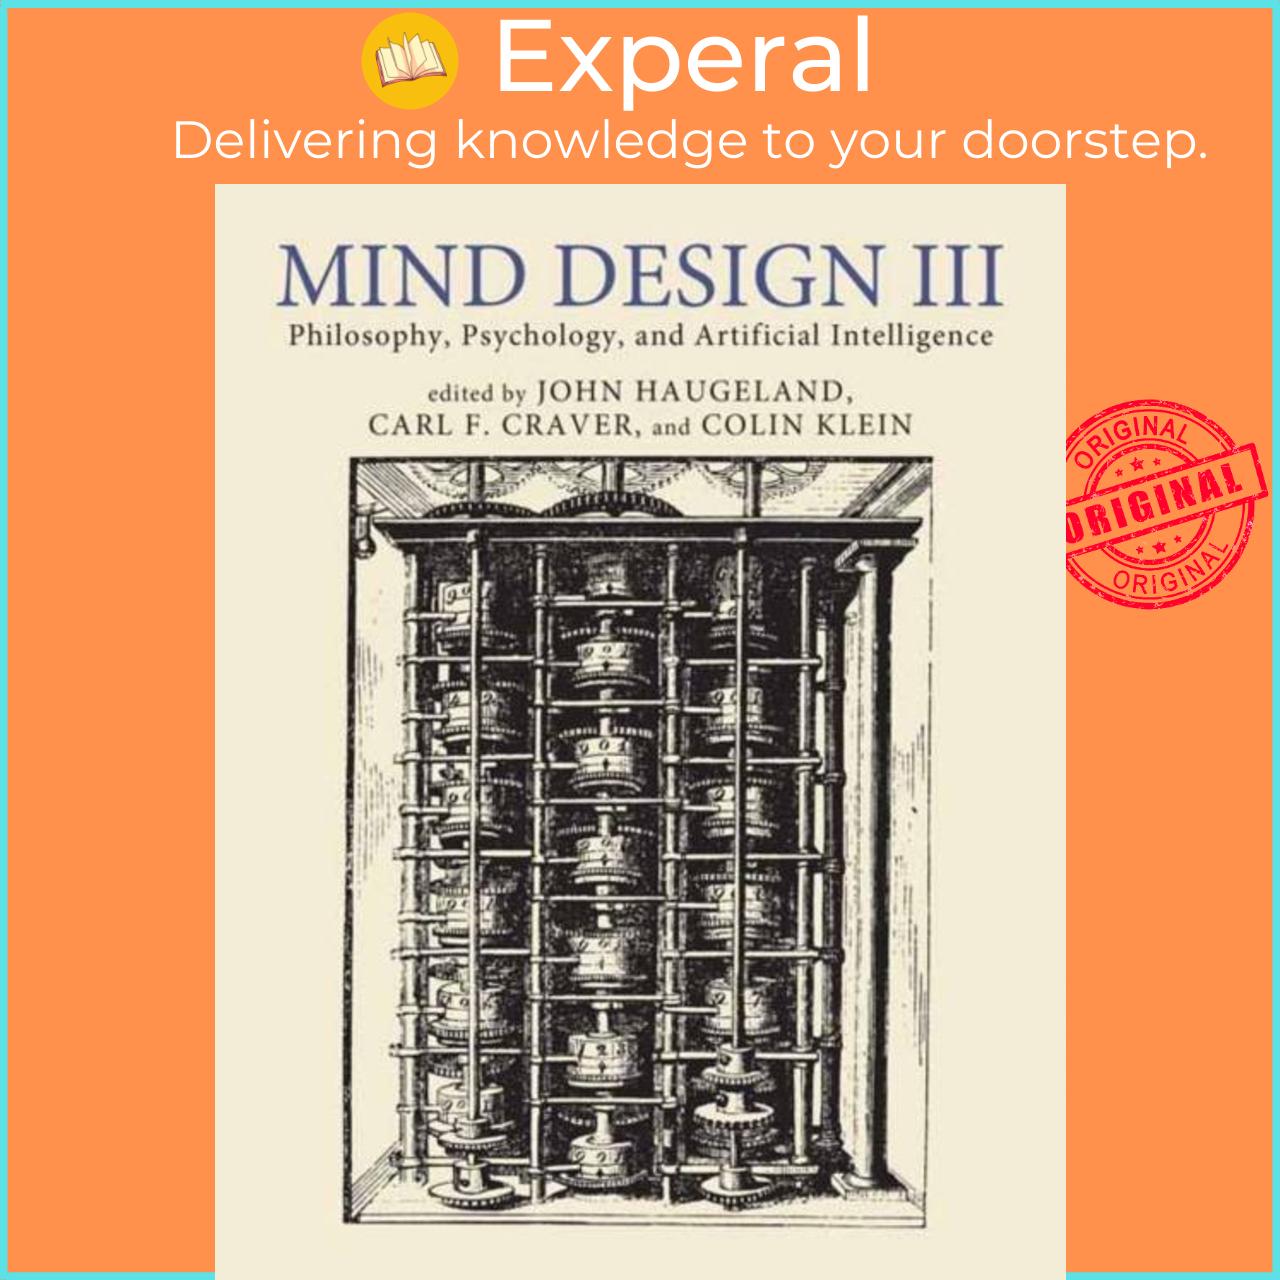 Sách - Mind Design III - Philosophy, Psychology, and Artificial Intelligence by John Haugeland (UK edition, paperback)